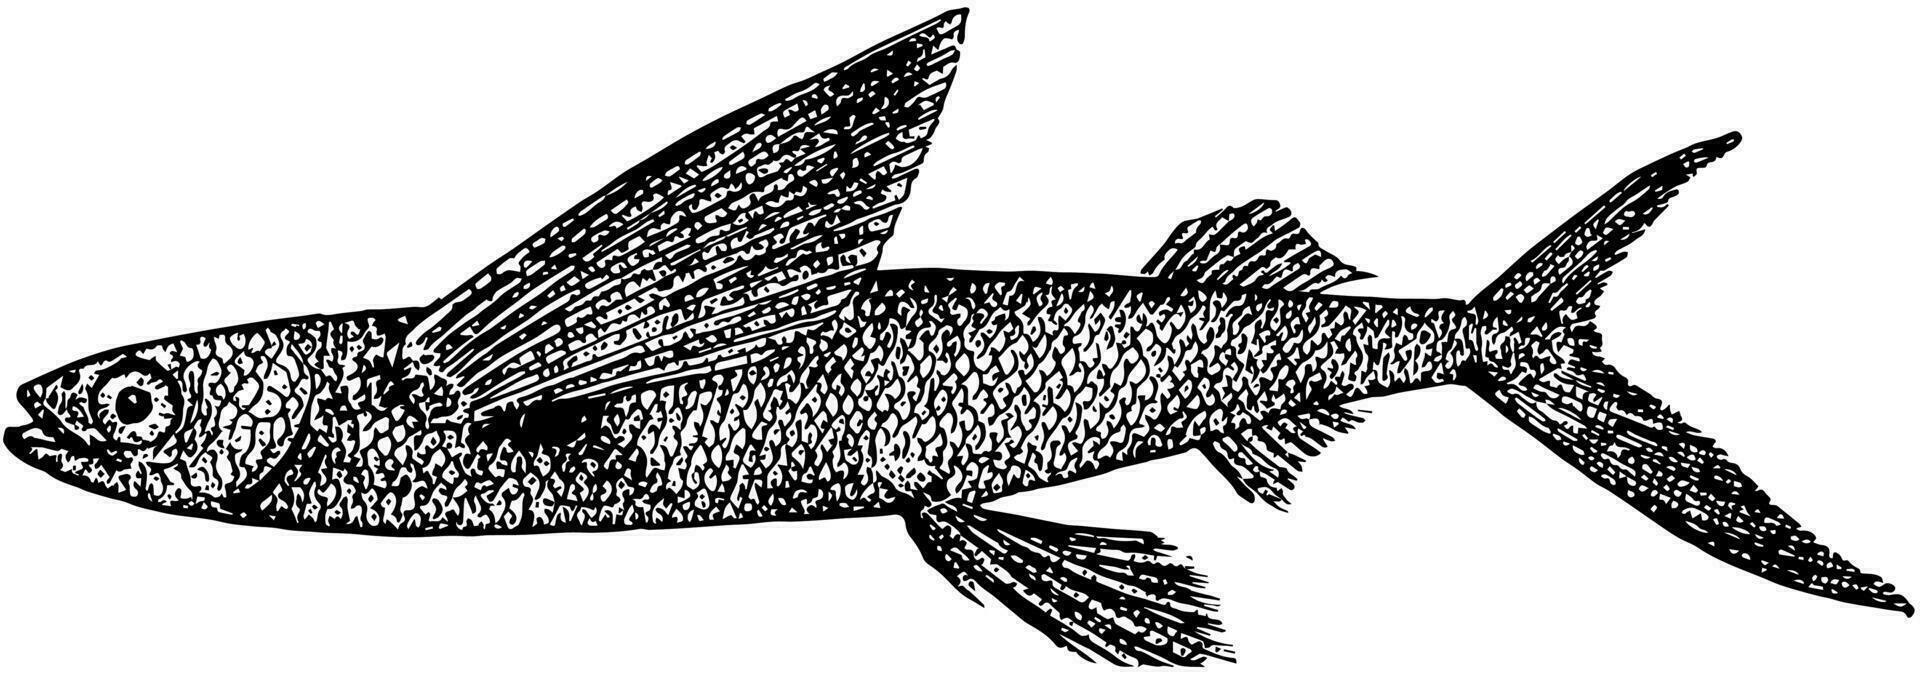 California volador pez, Clásico ilustración. vector